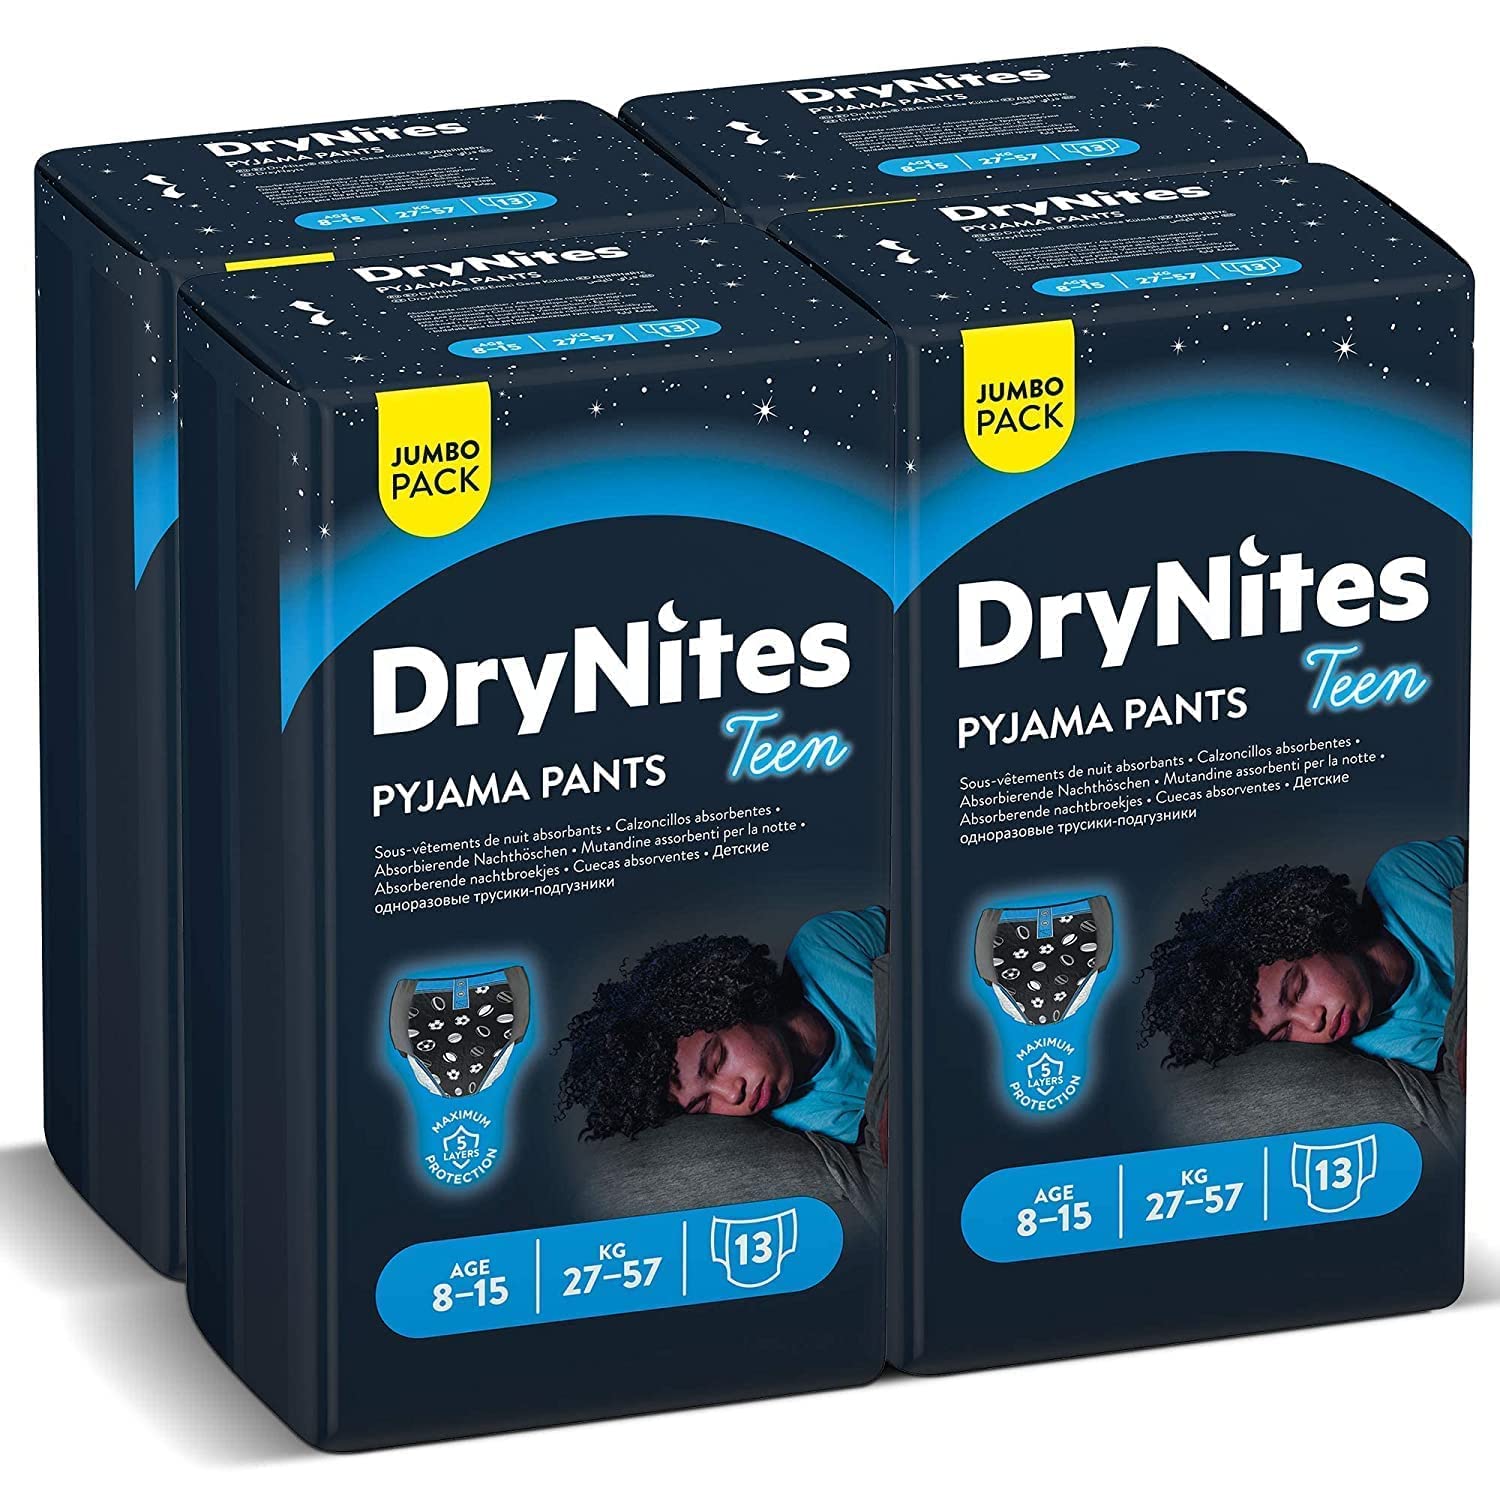 Drynites Pyjama Pants,Blue, Age 8-15 Y, Boy, 27-57 Kg, 4 X 13 Bed Wetting Pants سروال بيجامة للاولاد، للفئة العمرية 8 - 15 سنوات، بوزن 27 - 57 كجم، 4 × 13 سروال لبلل السرير، من دراي نايتس